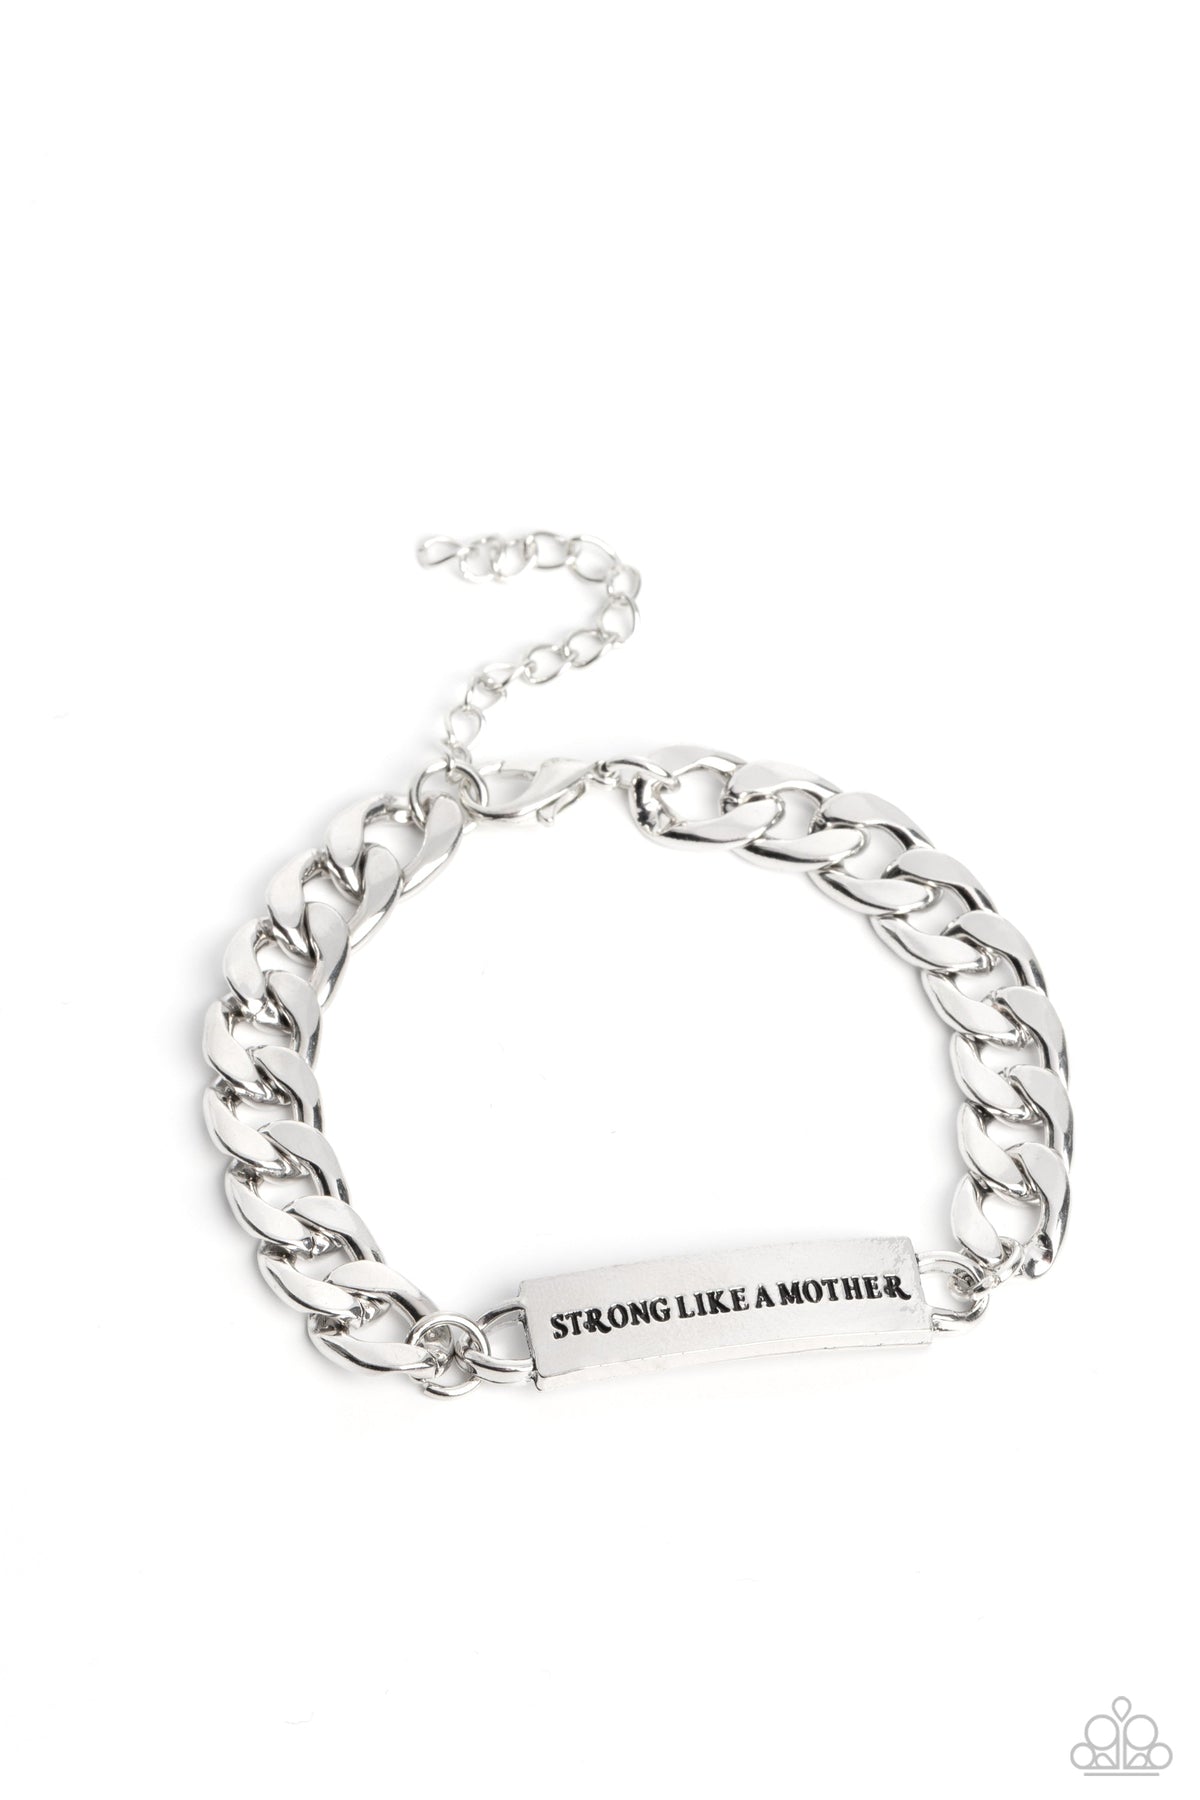 Mighty Matriarch Silver Inspirational Bracelet - Paparazzi Accessories- lightbox - CarasShop.com - $5 Jewelry by Cara Jewels